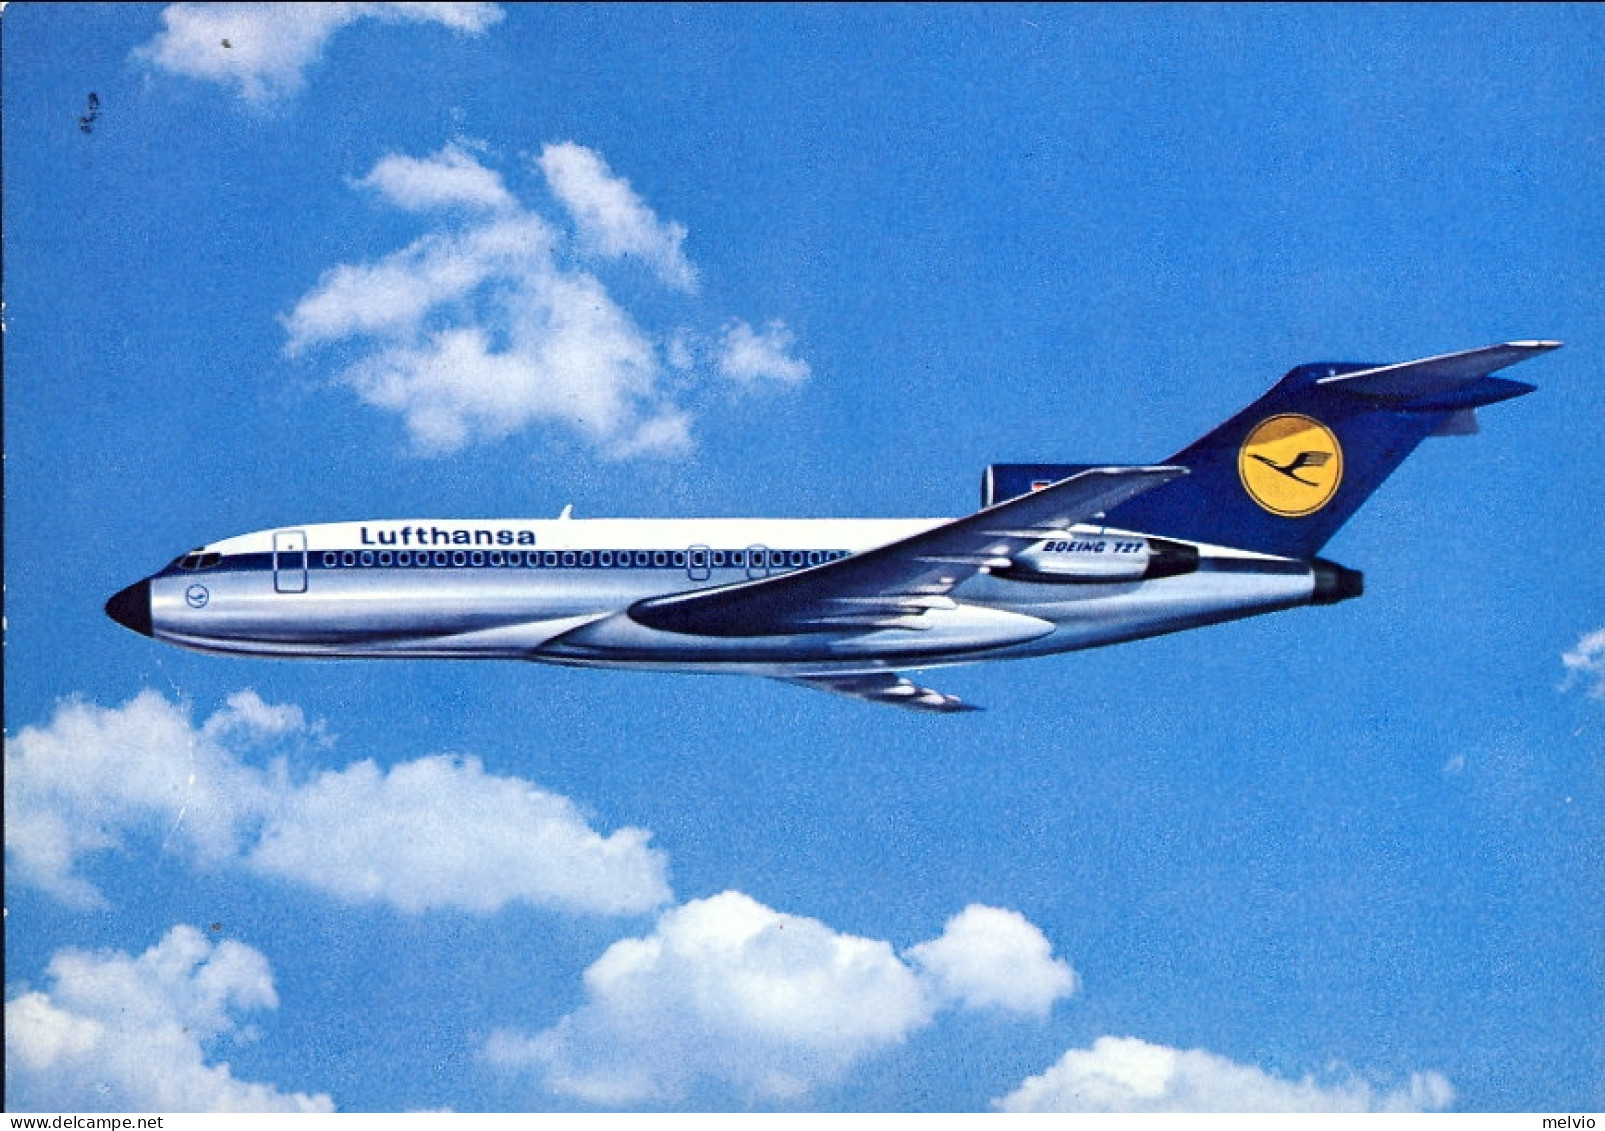 San Marino-1974 Cartolina Lufthansa I^volo DC 10 Roma Francoforte Del 20 Gennaio - Corréo Aéreo